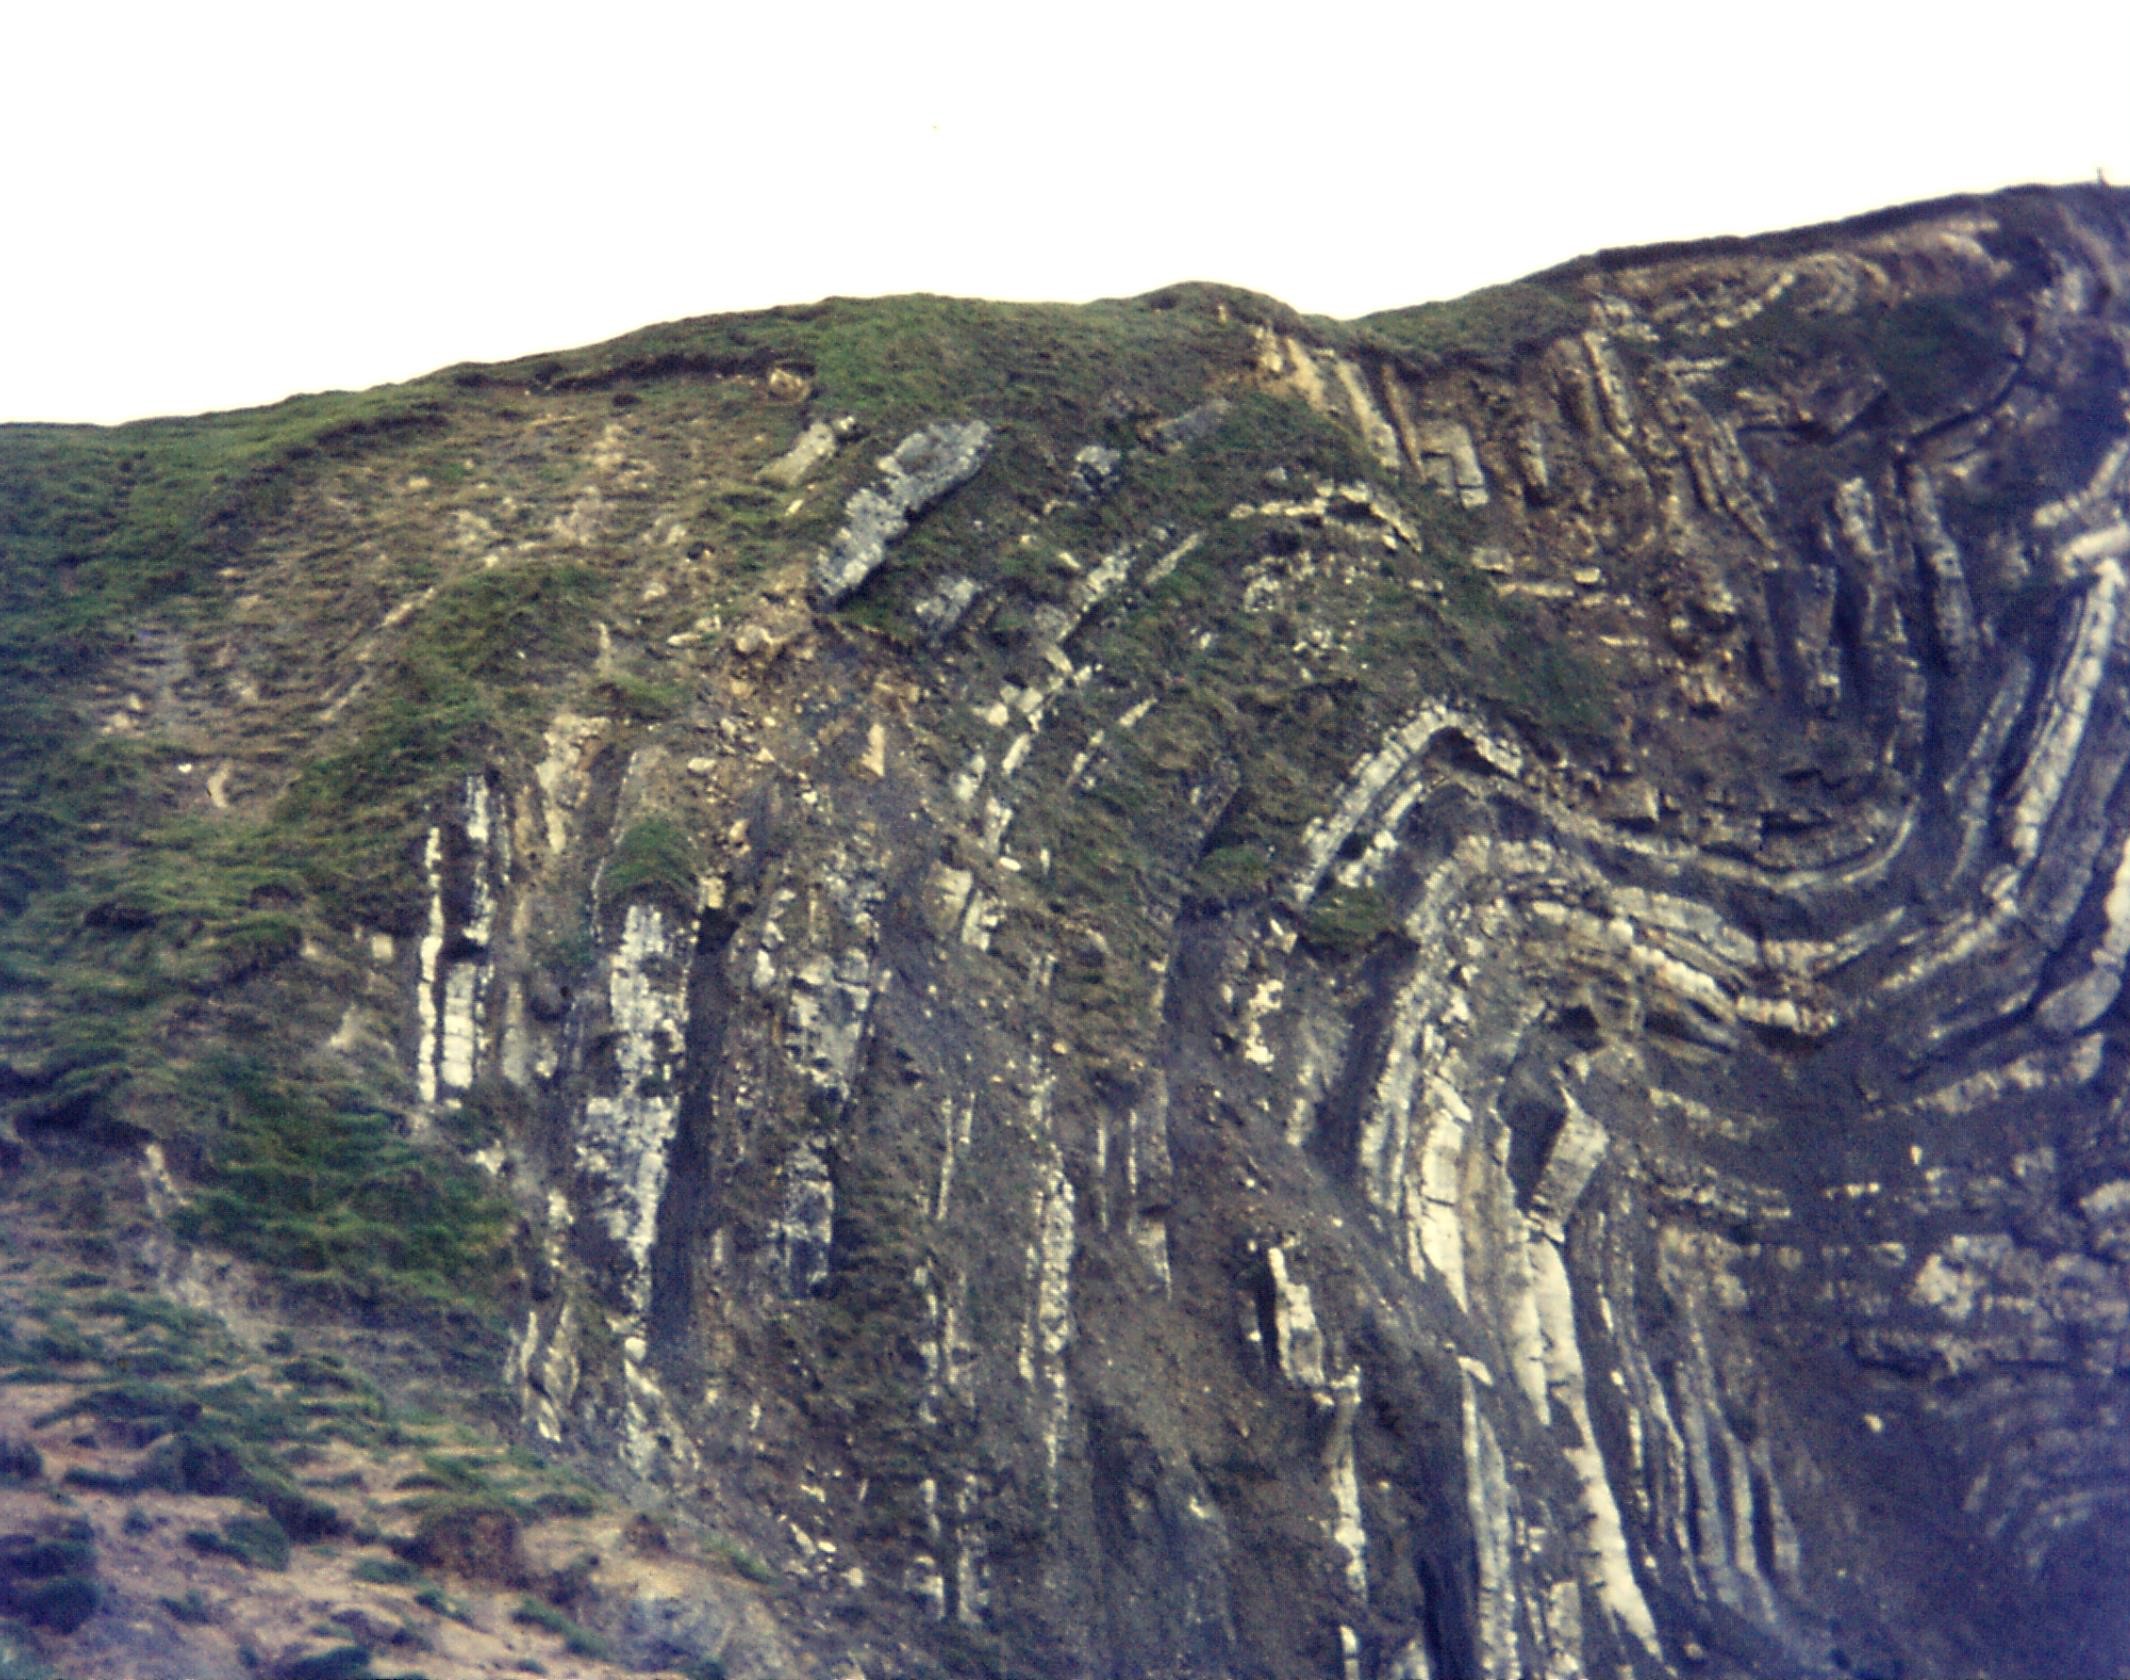 1972. Dorset1. Lulworth. Stair Hole. Folded Purbeck Gp limestones